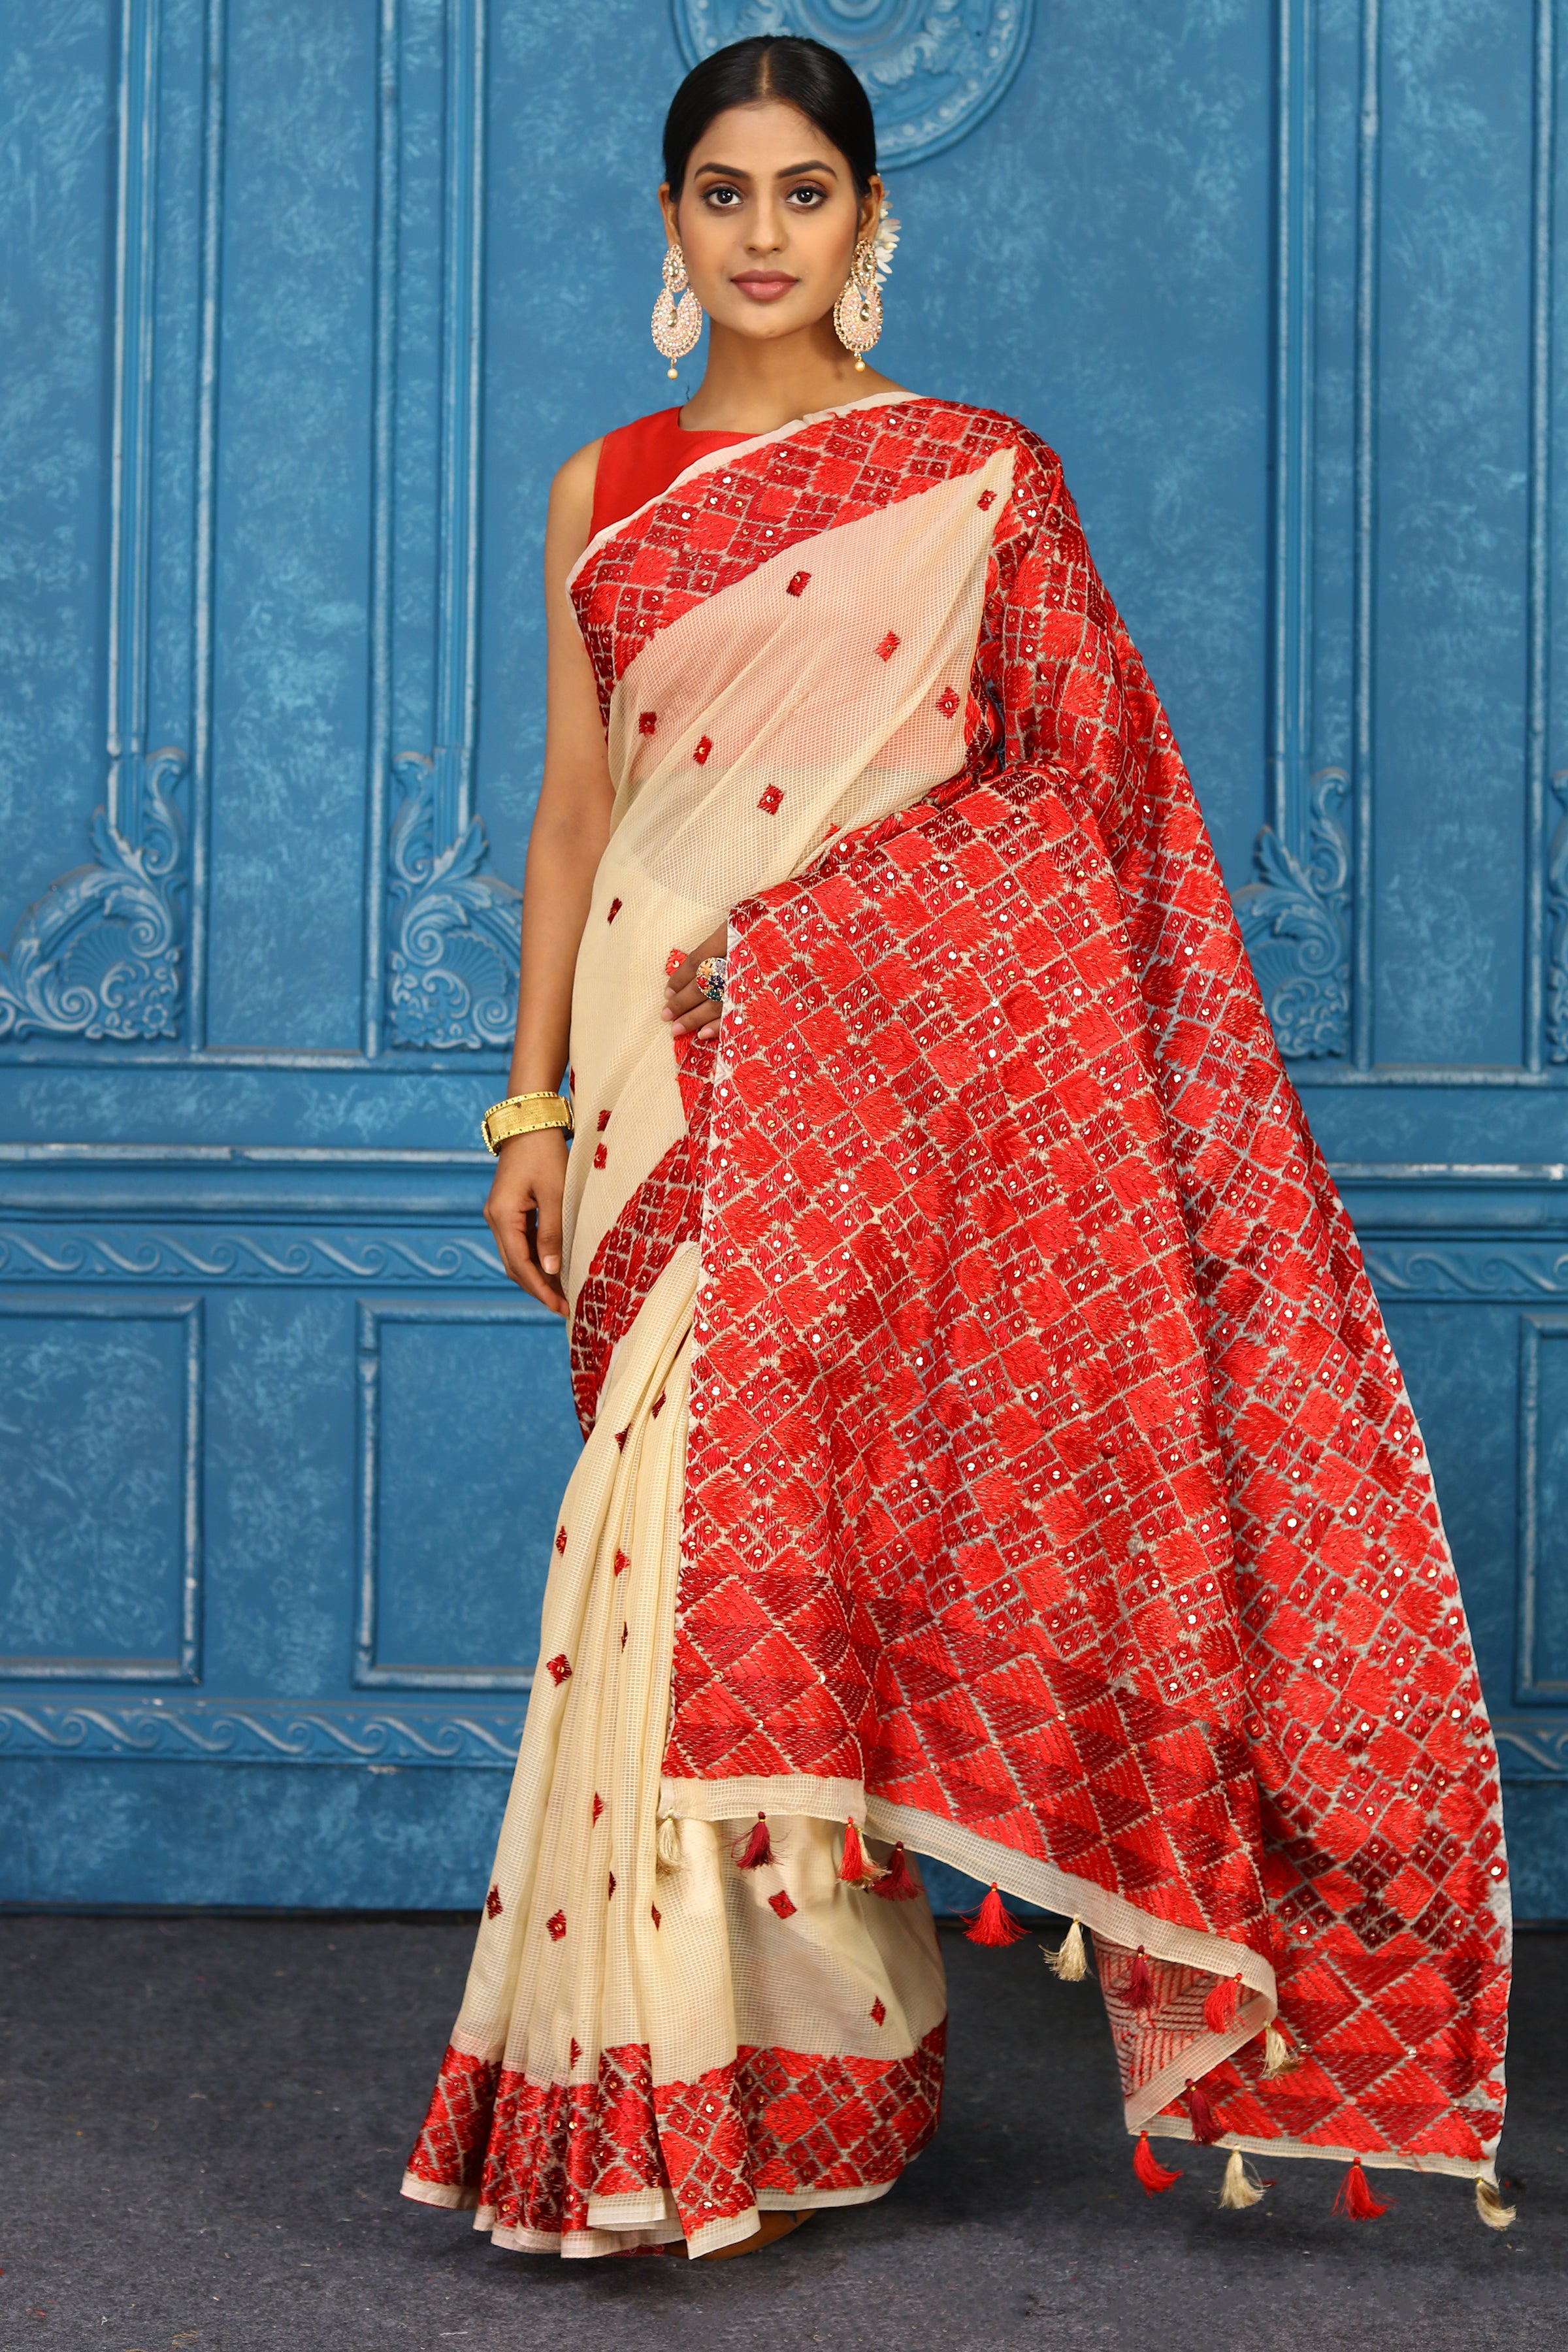 Sarees: Buy Latest Indian Sarees Collection Online